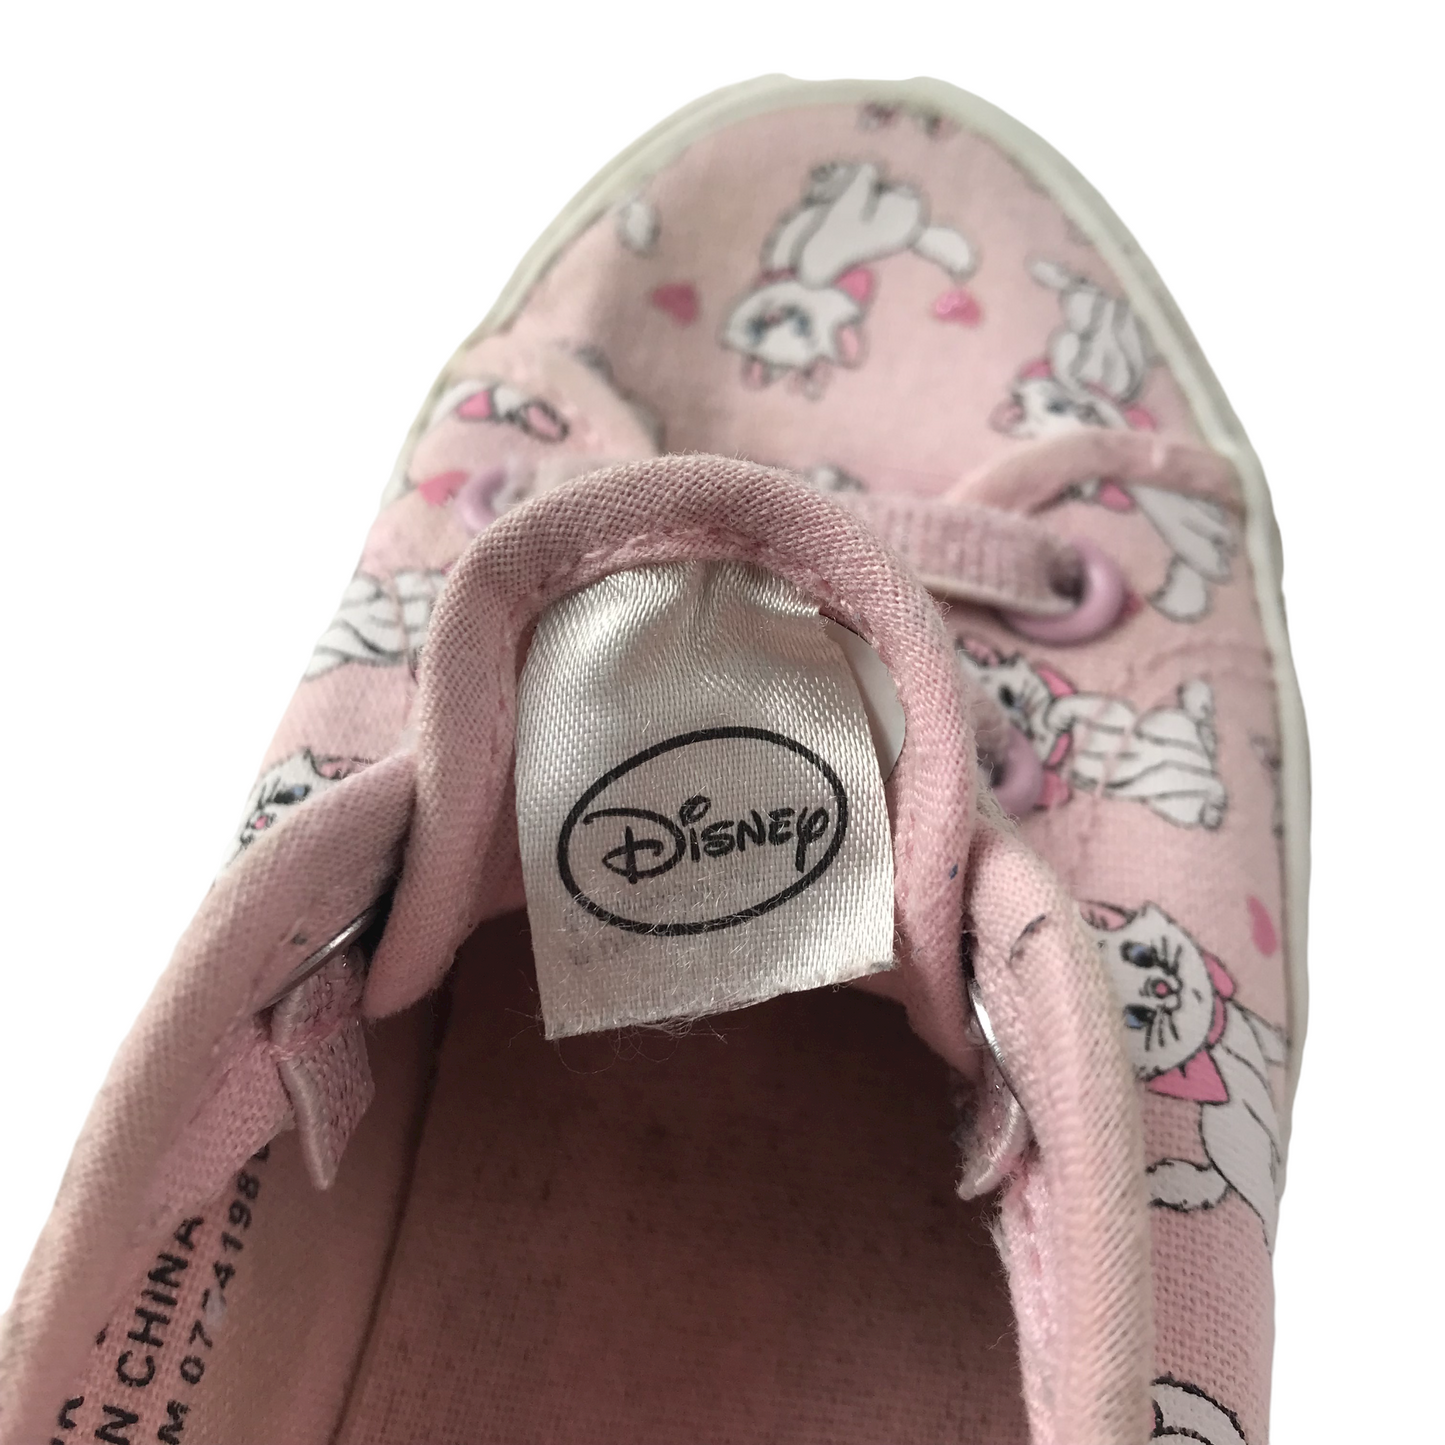 Disney Aristo Cats Light Pink Canvas Trainers Shoe Size 11 (jr)